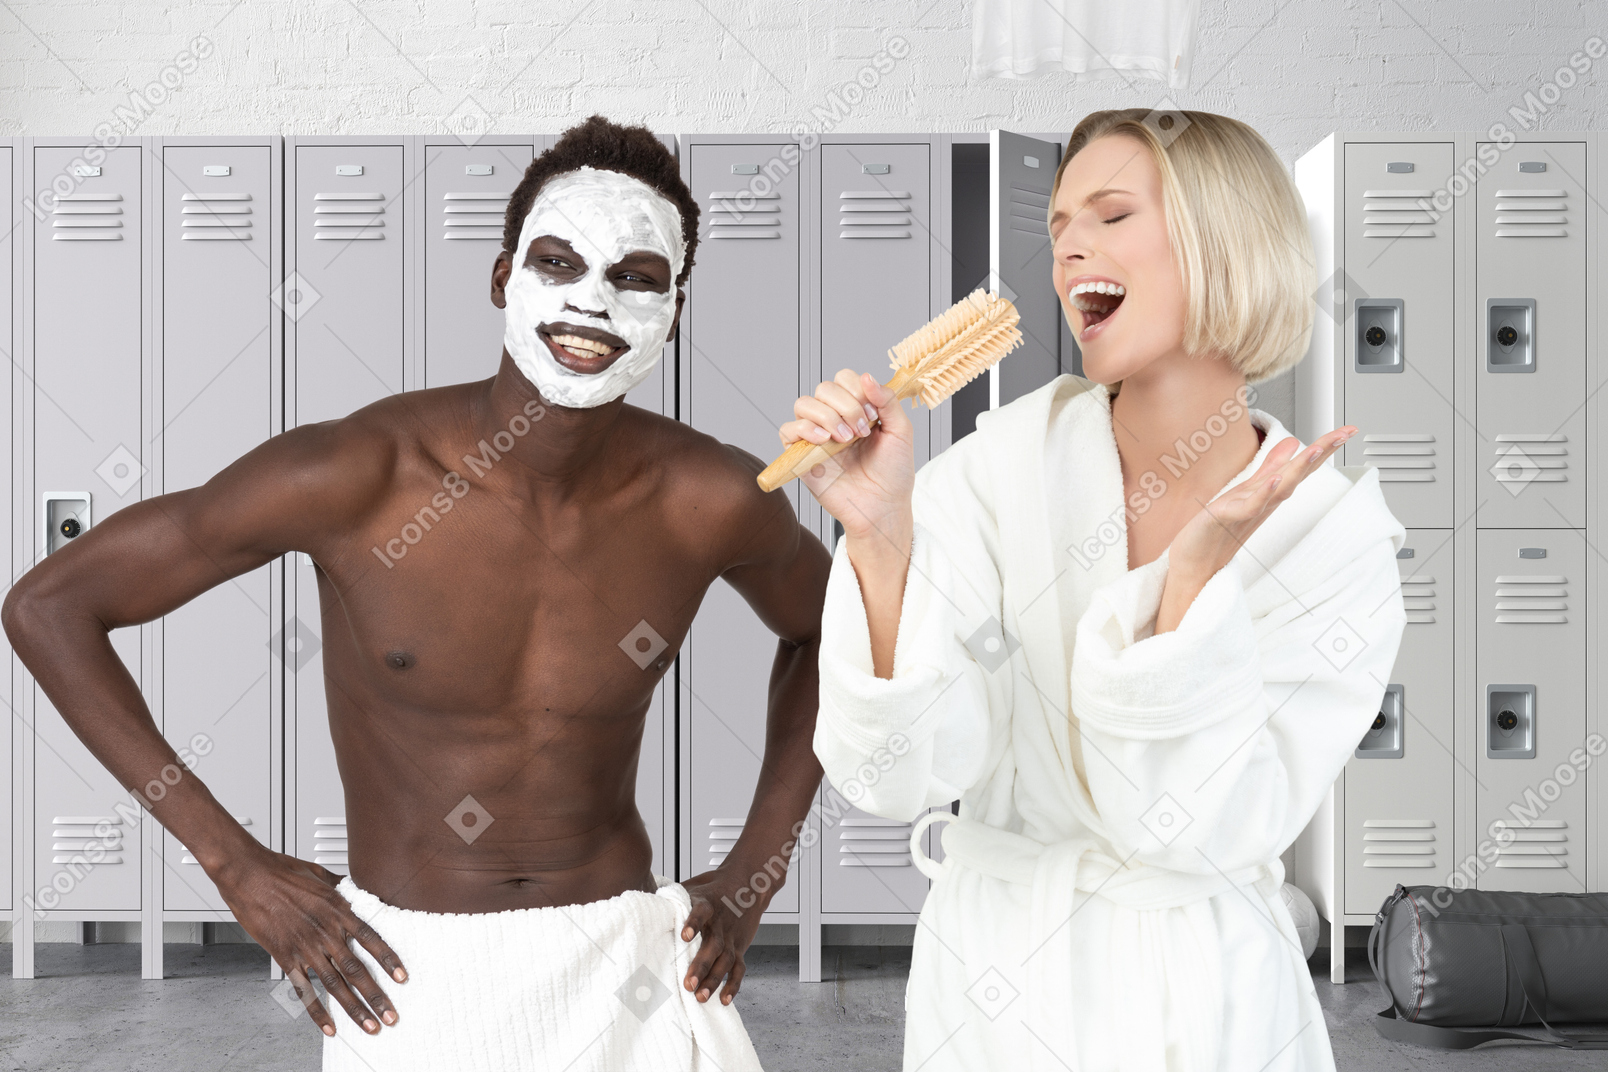 Woman singing into hairbrush next to man doing facial mask